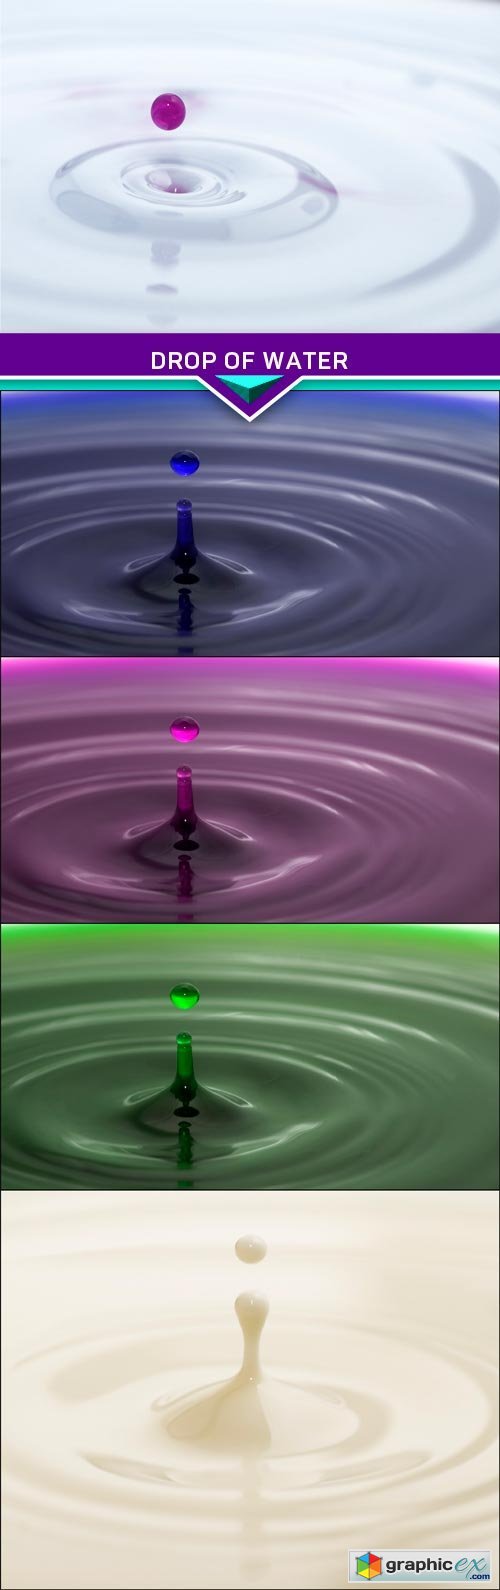 Drop of water 5x JPEG